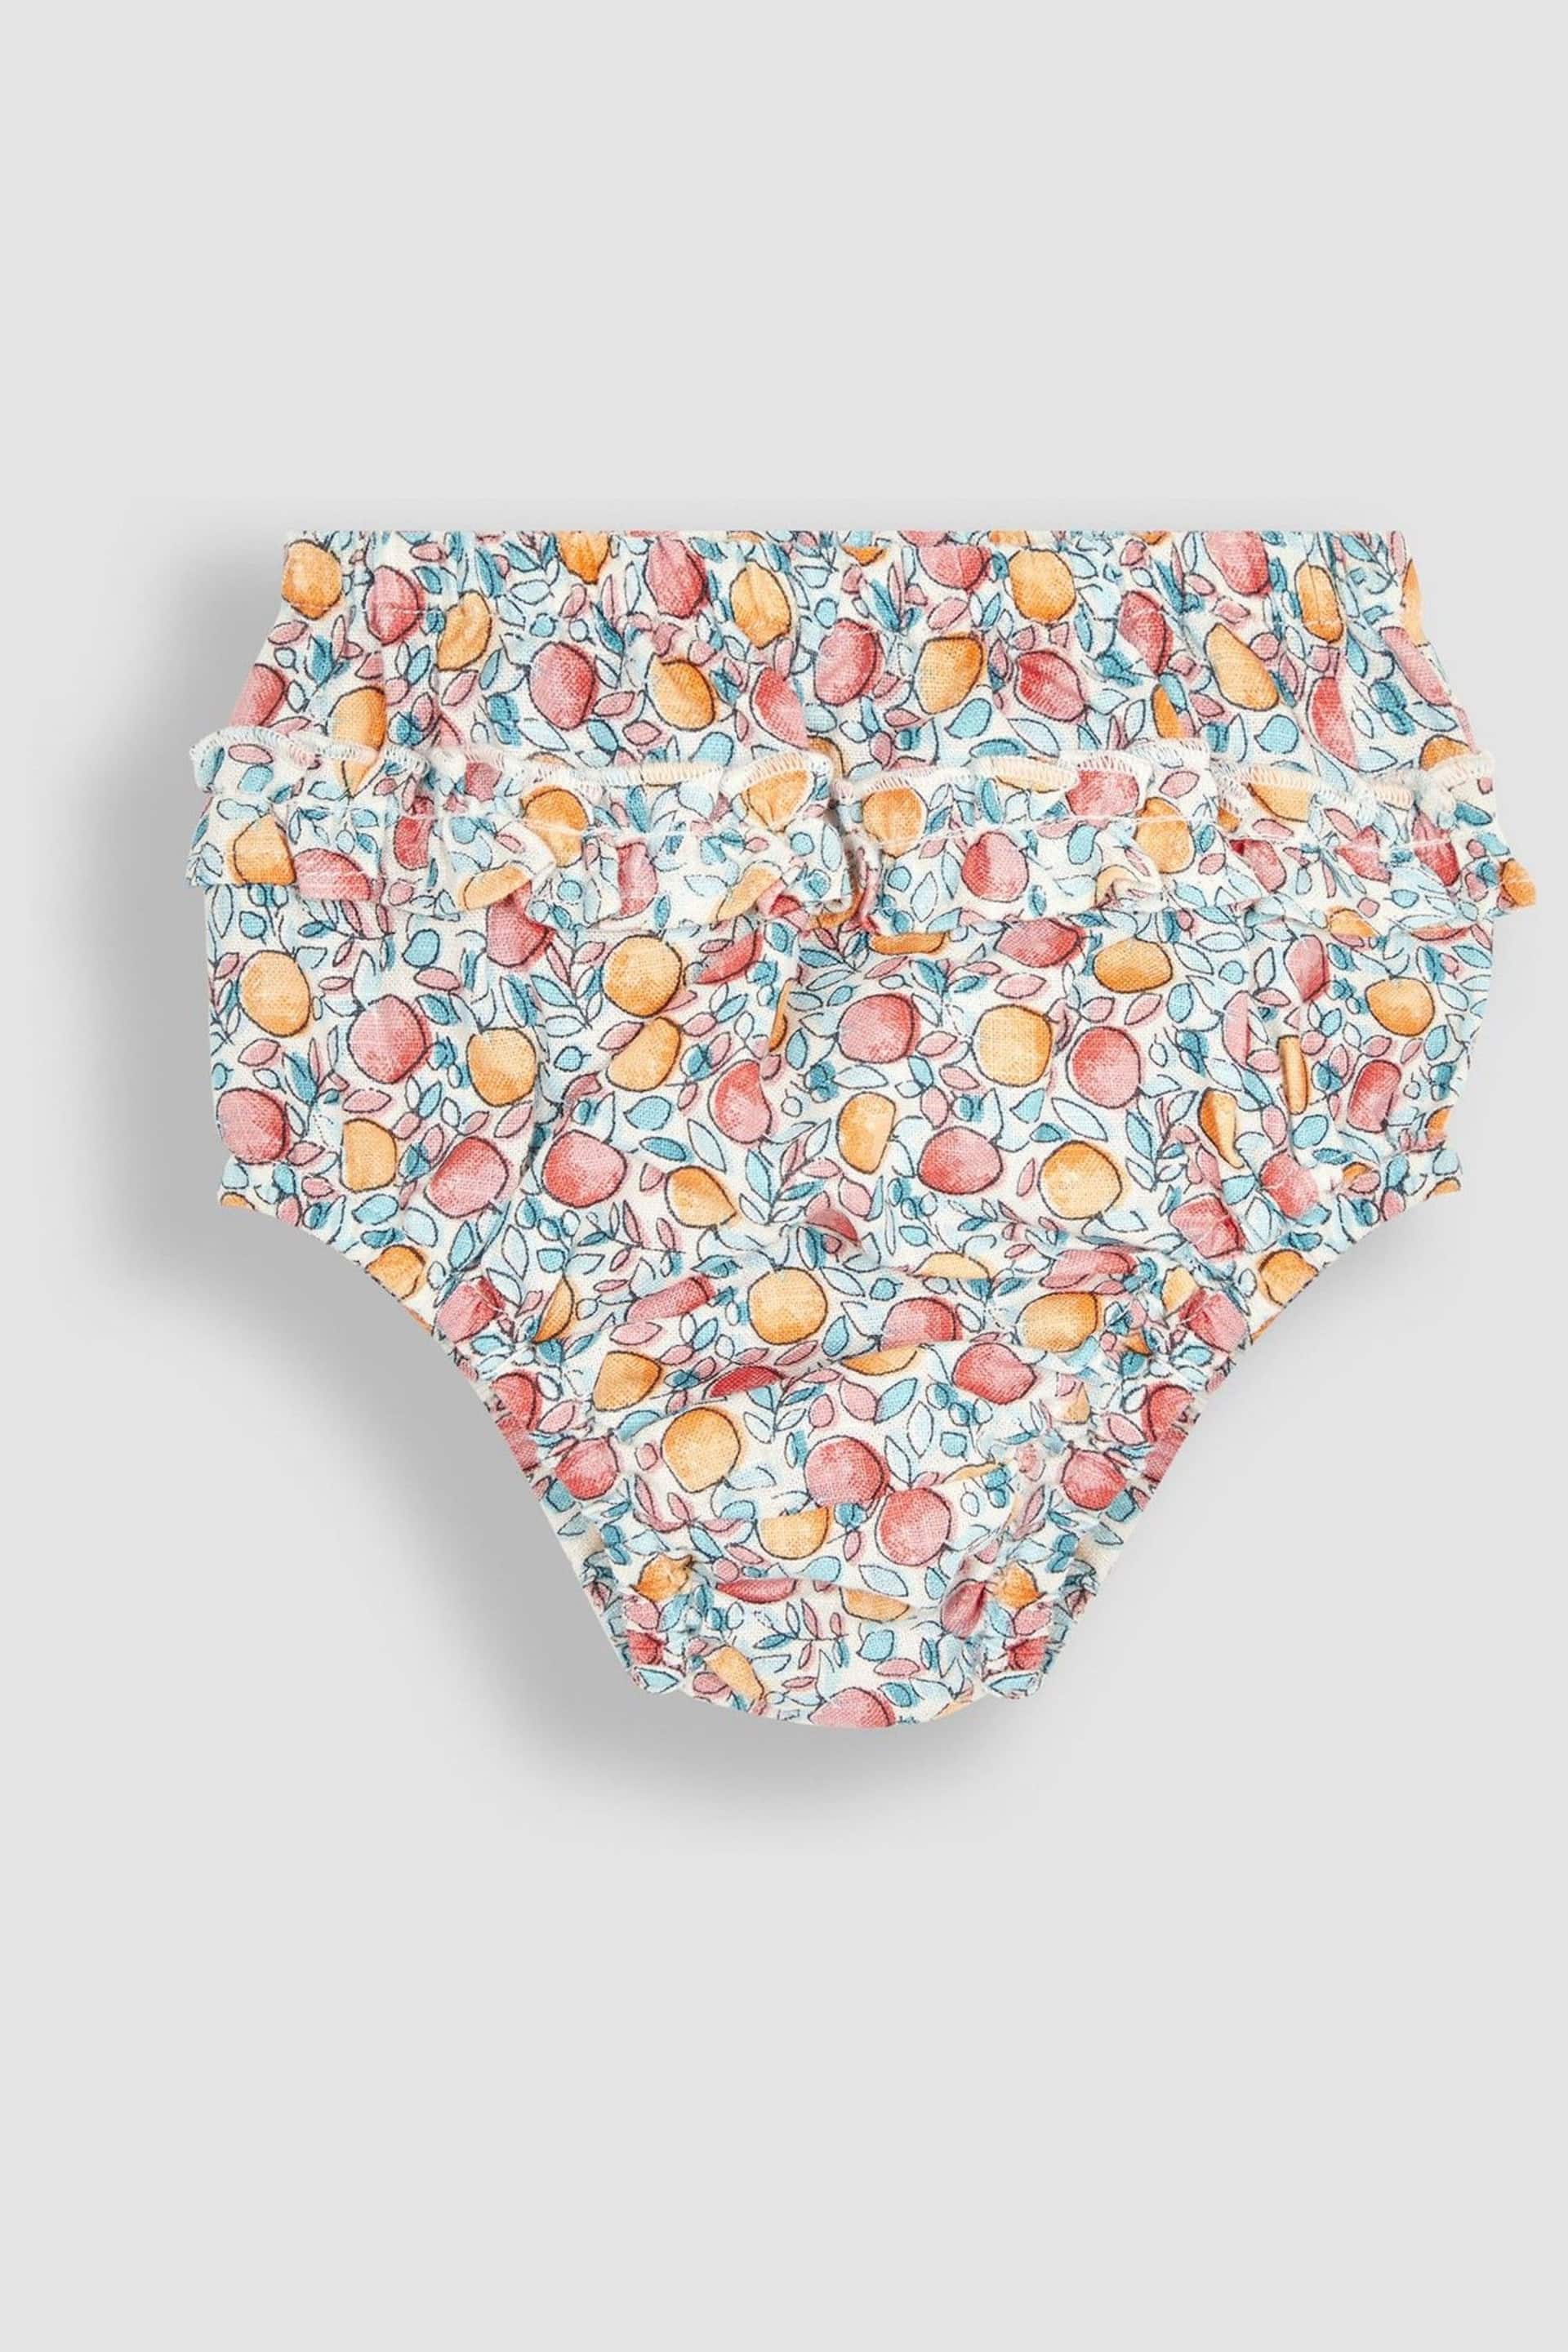 JoJo Maman Bébé Cream Apple & Peach Cotton Linen Smocked Baby Dress With Knickers - Image 3 of 4